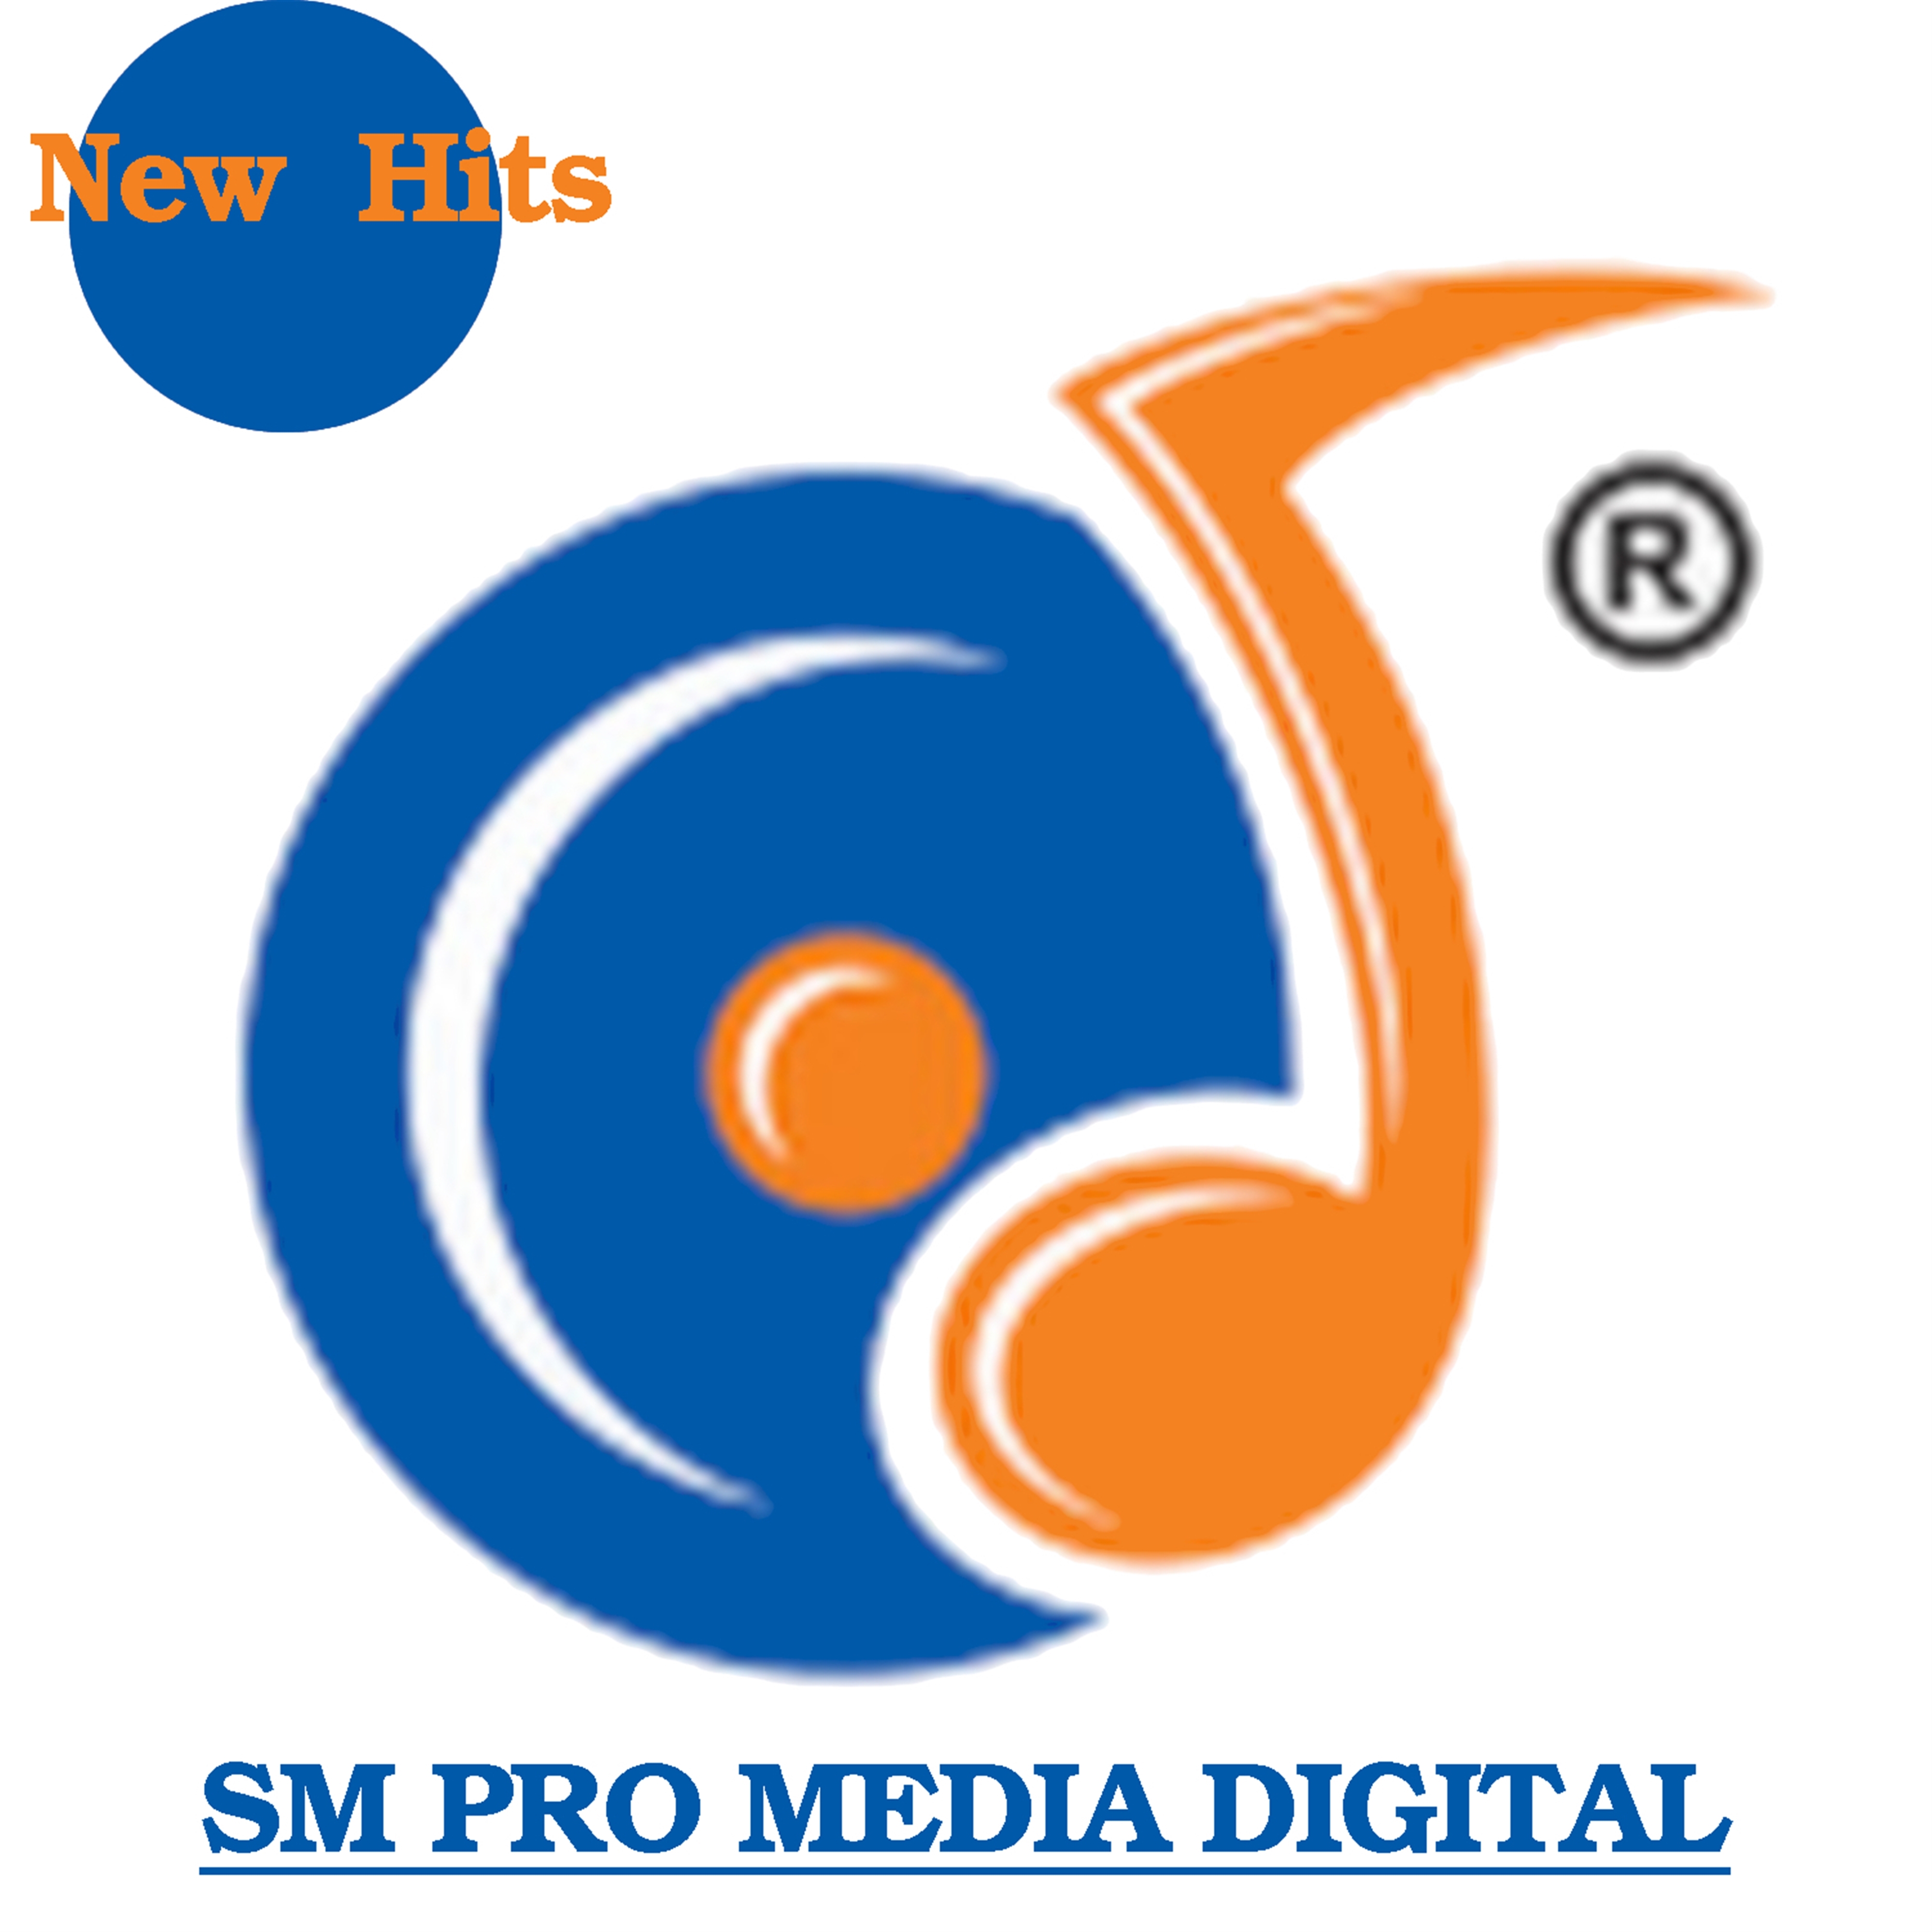 Sm Pro Media Digital New Hits